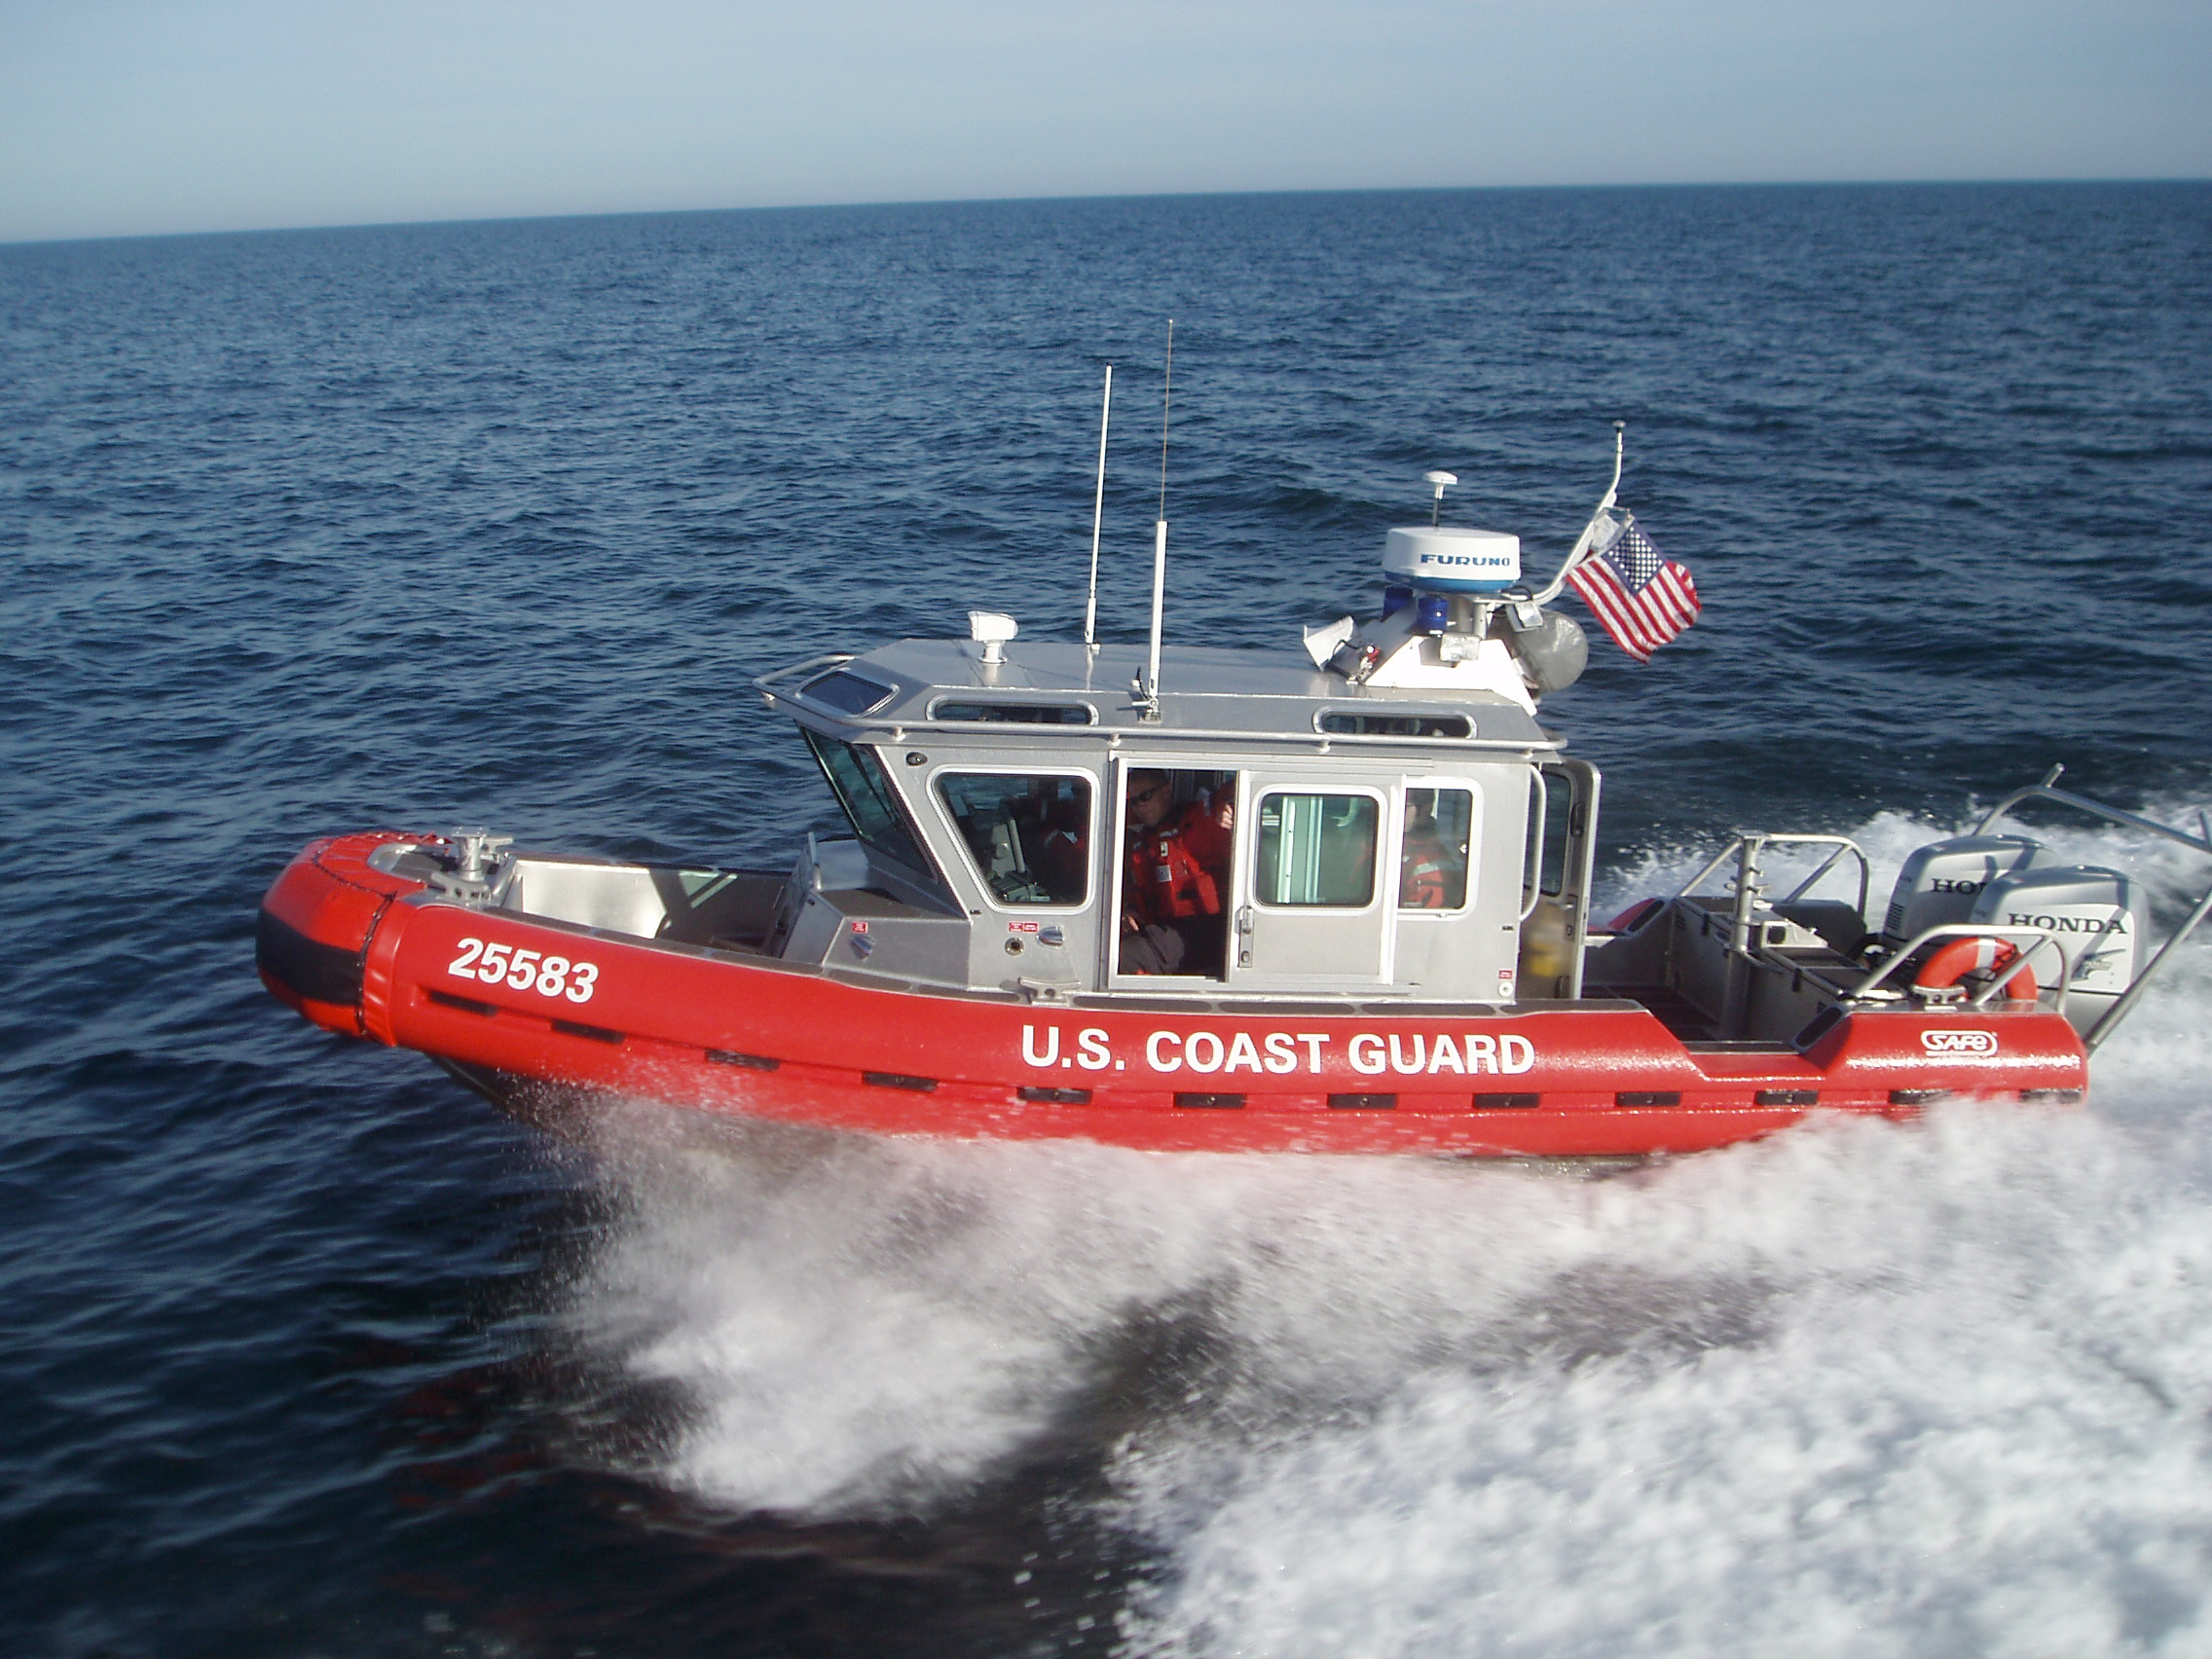 us coast guard boat in water